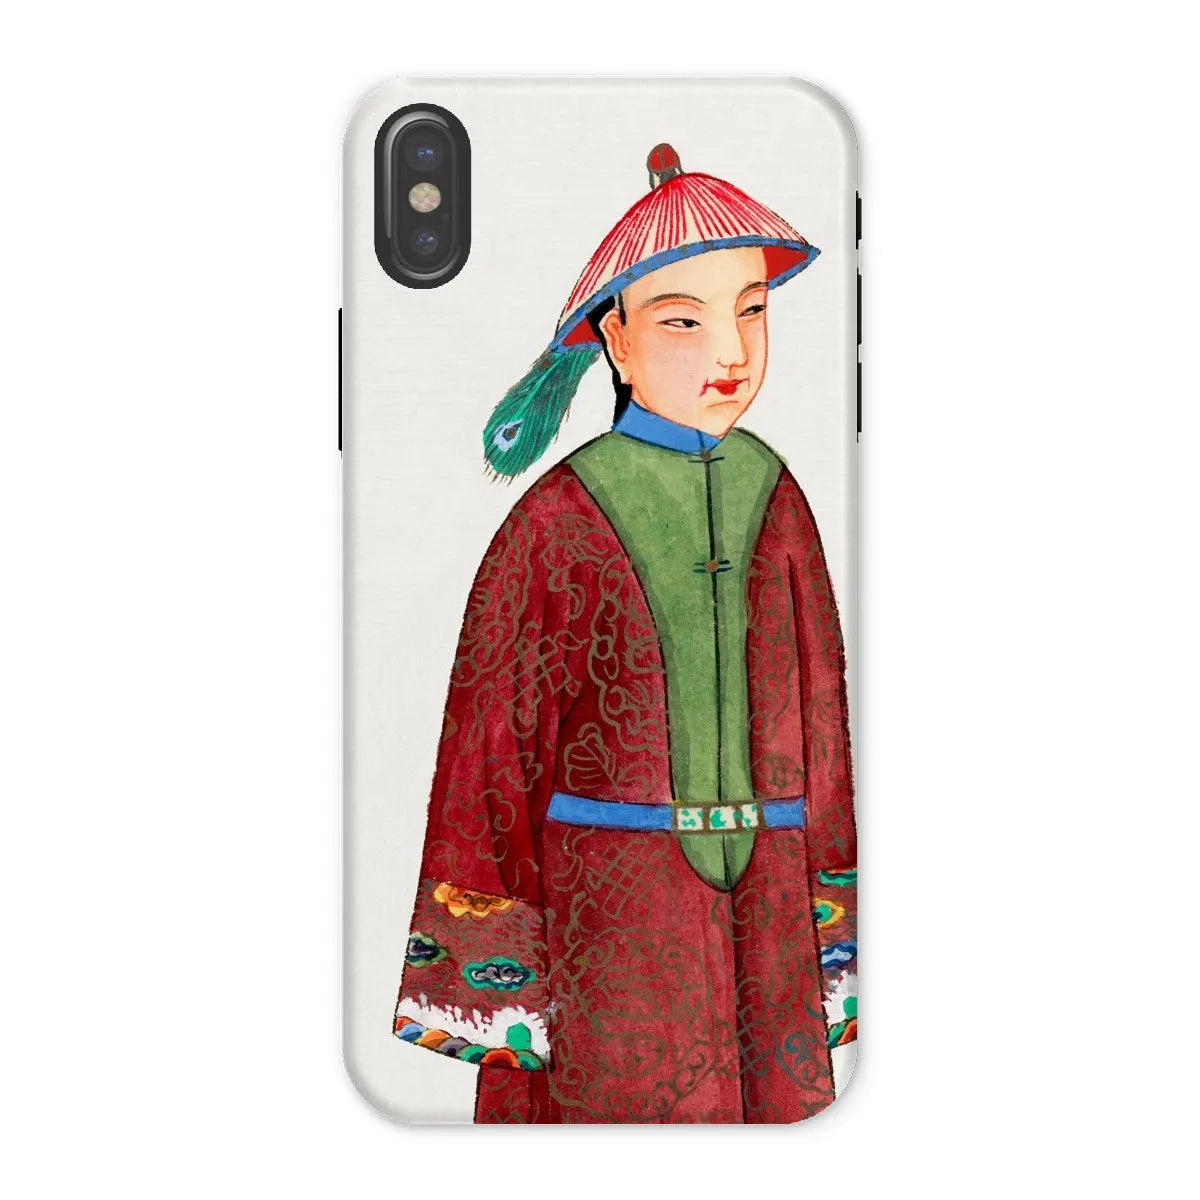 Manchu Dandy - Chinese Aesthetic Art Phone Case - Iphone x / Matte - Mobile Phone Cases - Aesthetic Art